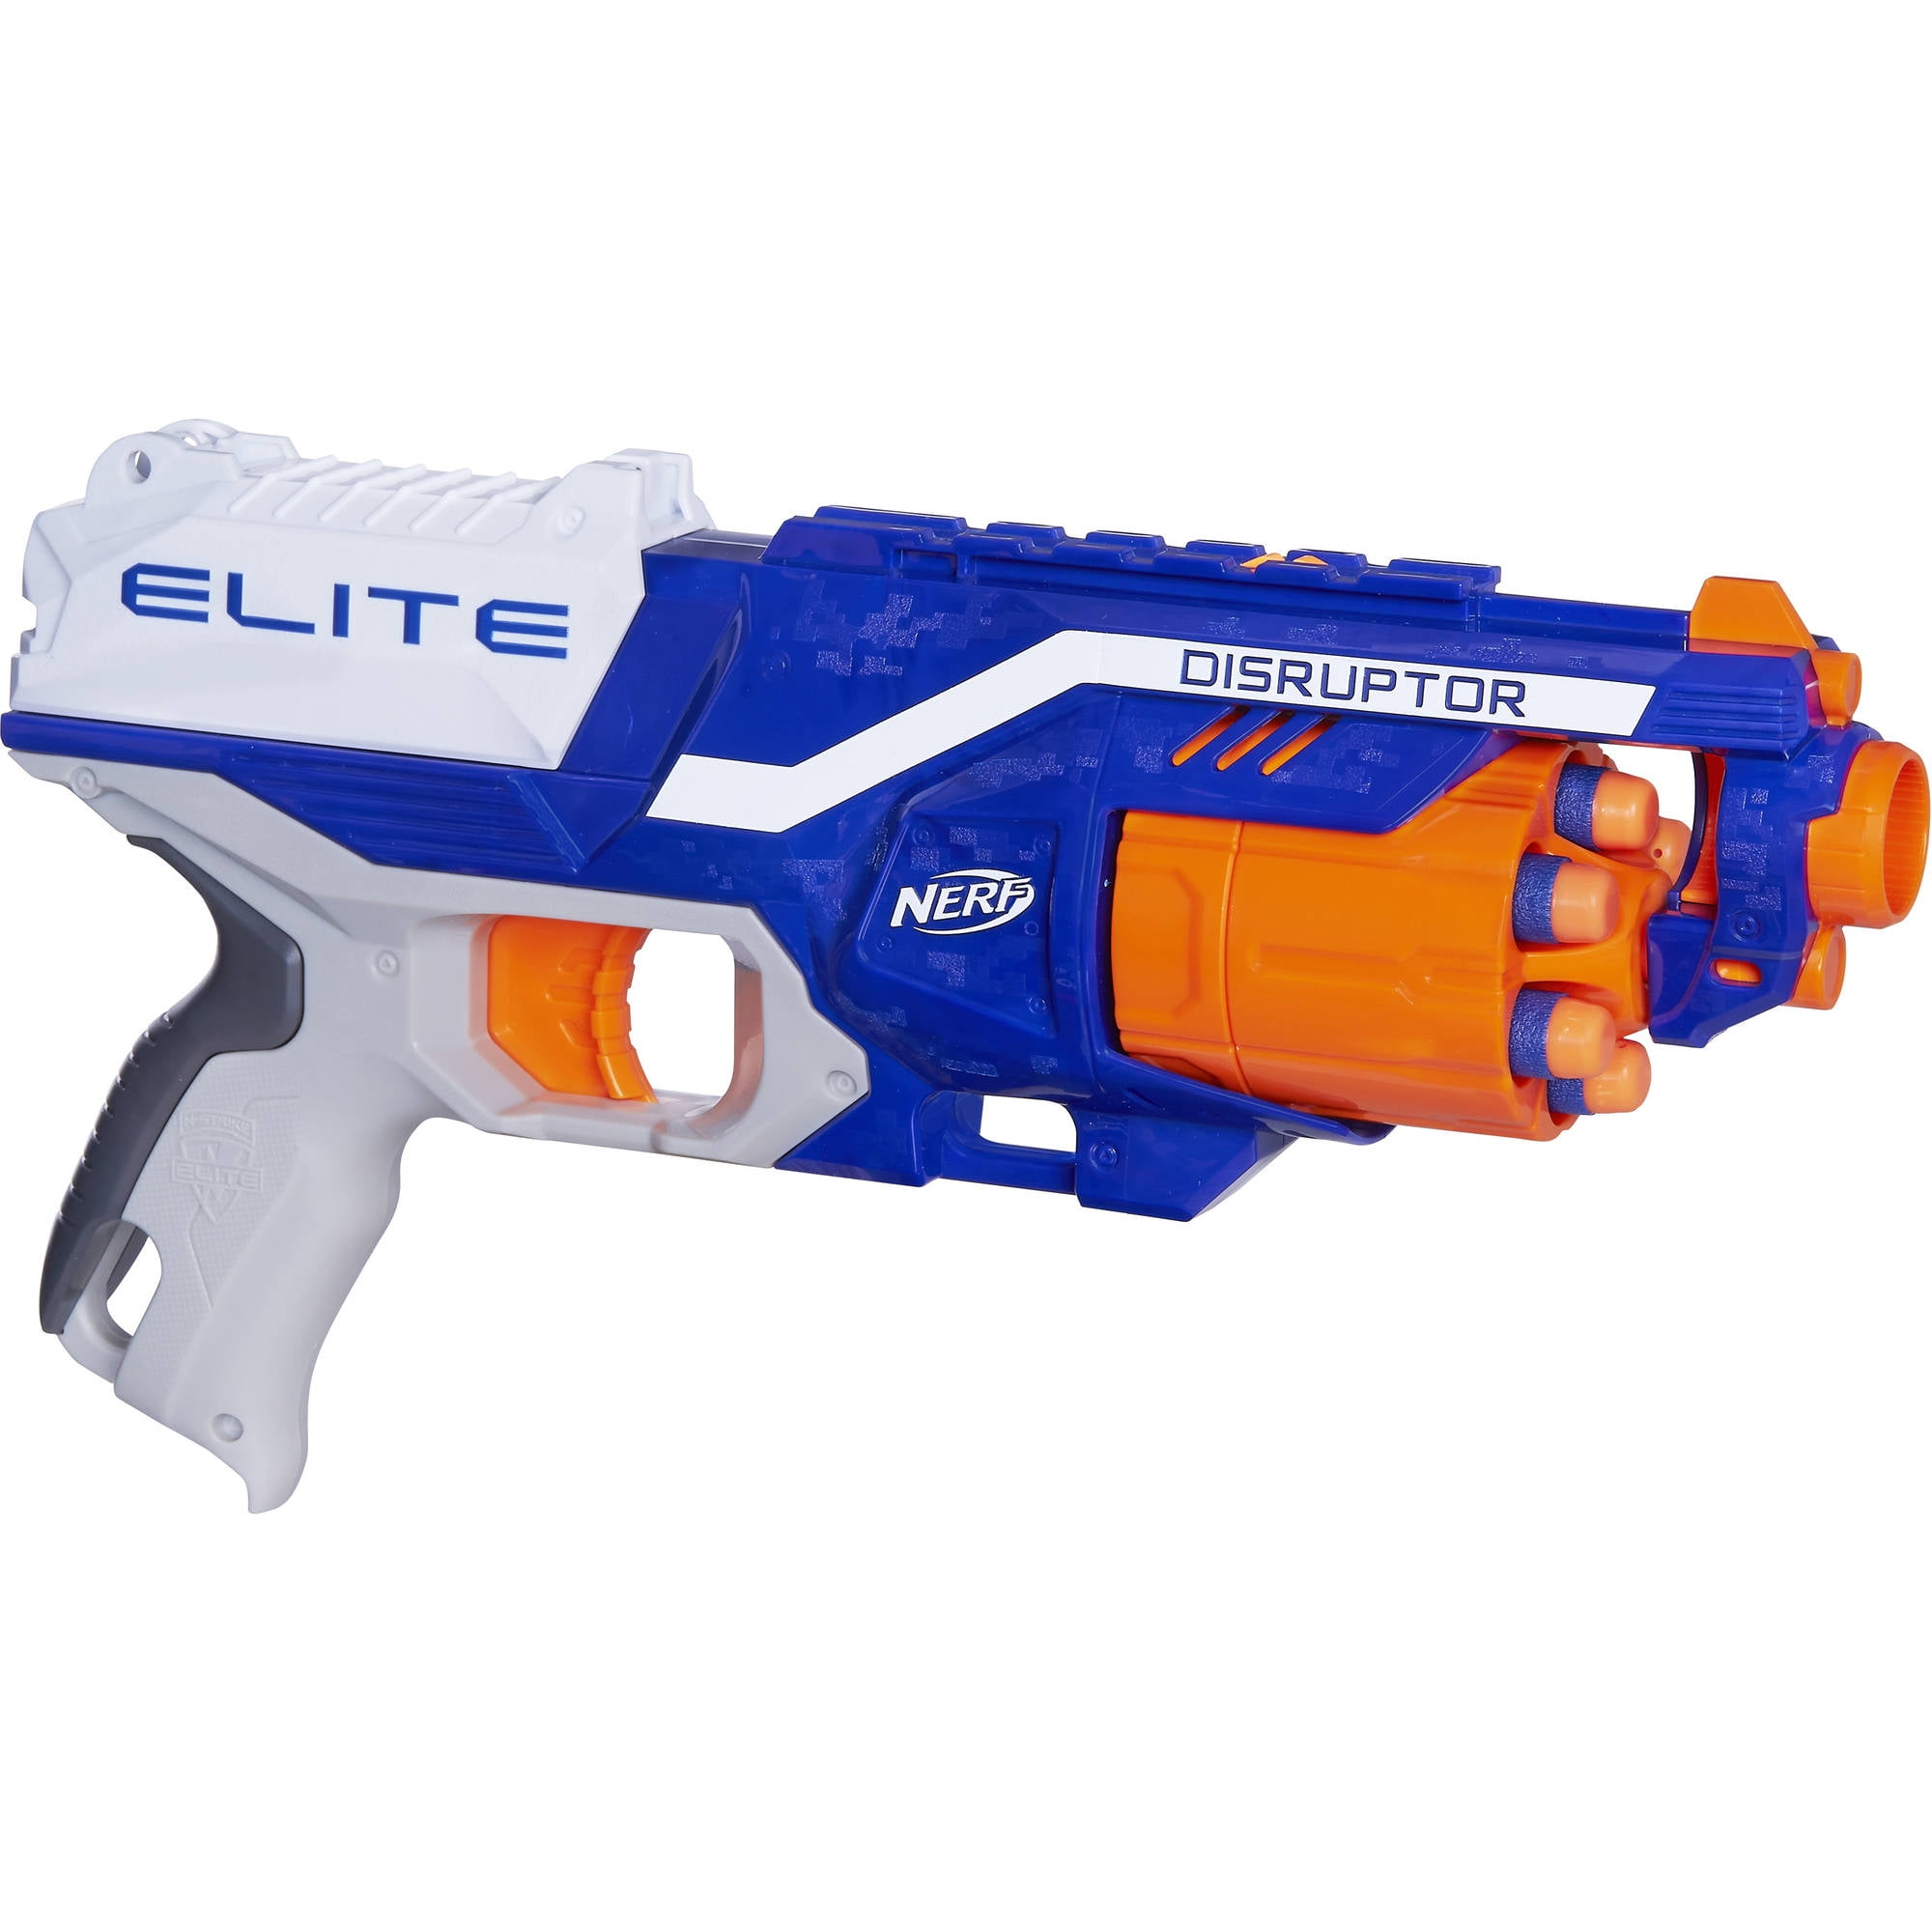 B9837 for sale online NERF N-Strike Elite Disruptor Blaster Toy 